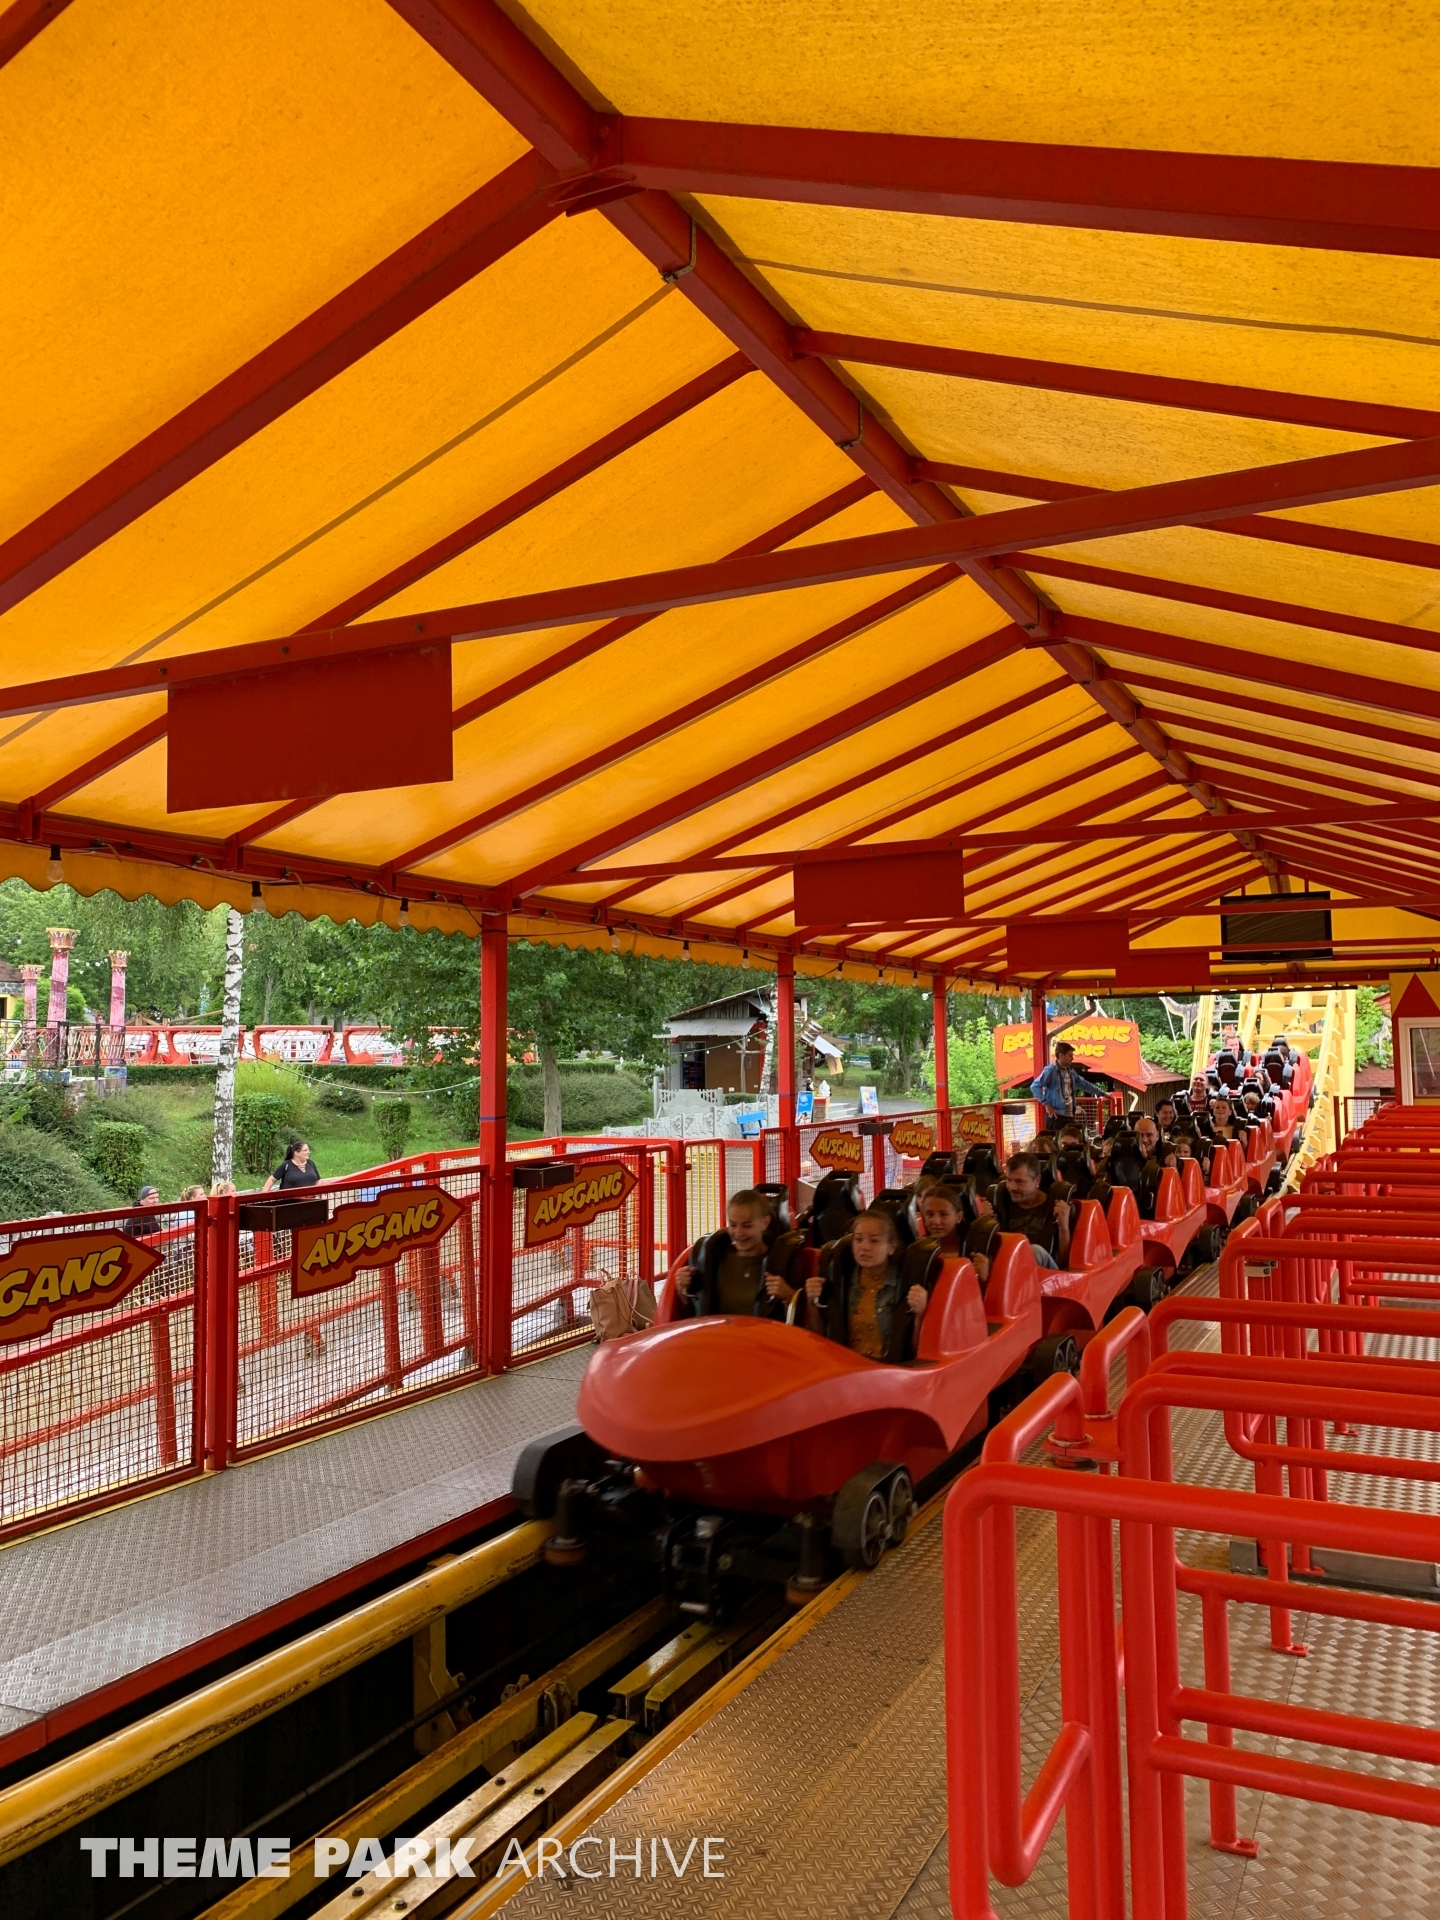 Boomerang at Freizeit Land Geiselwind | Theme Park Archive